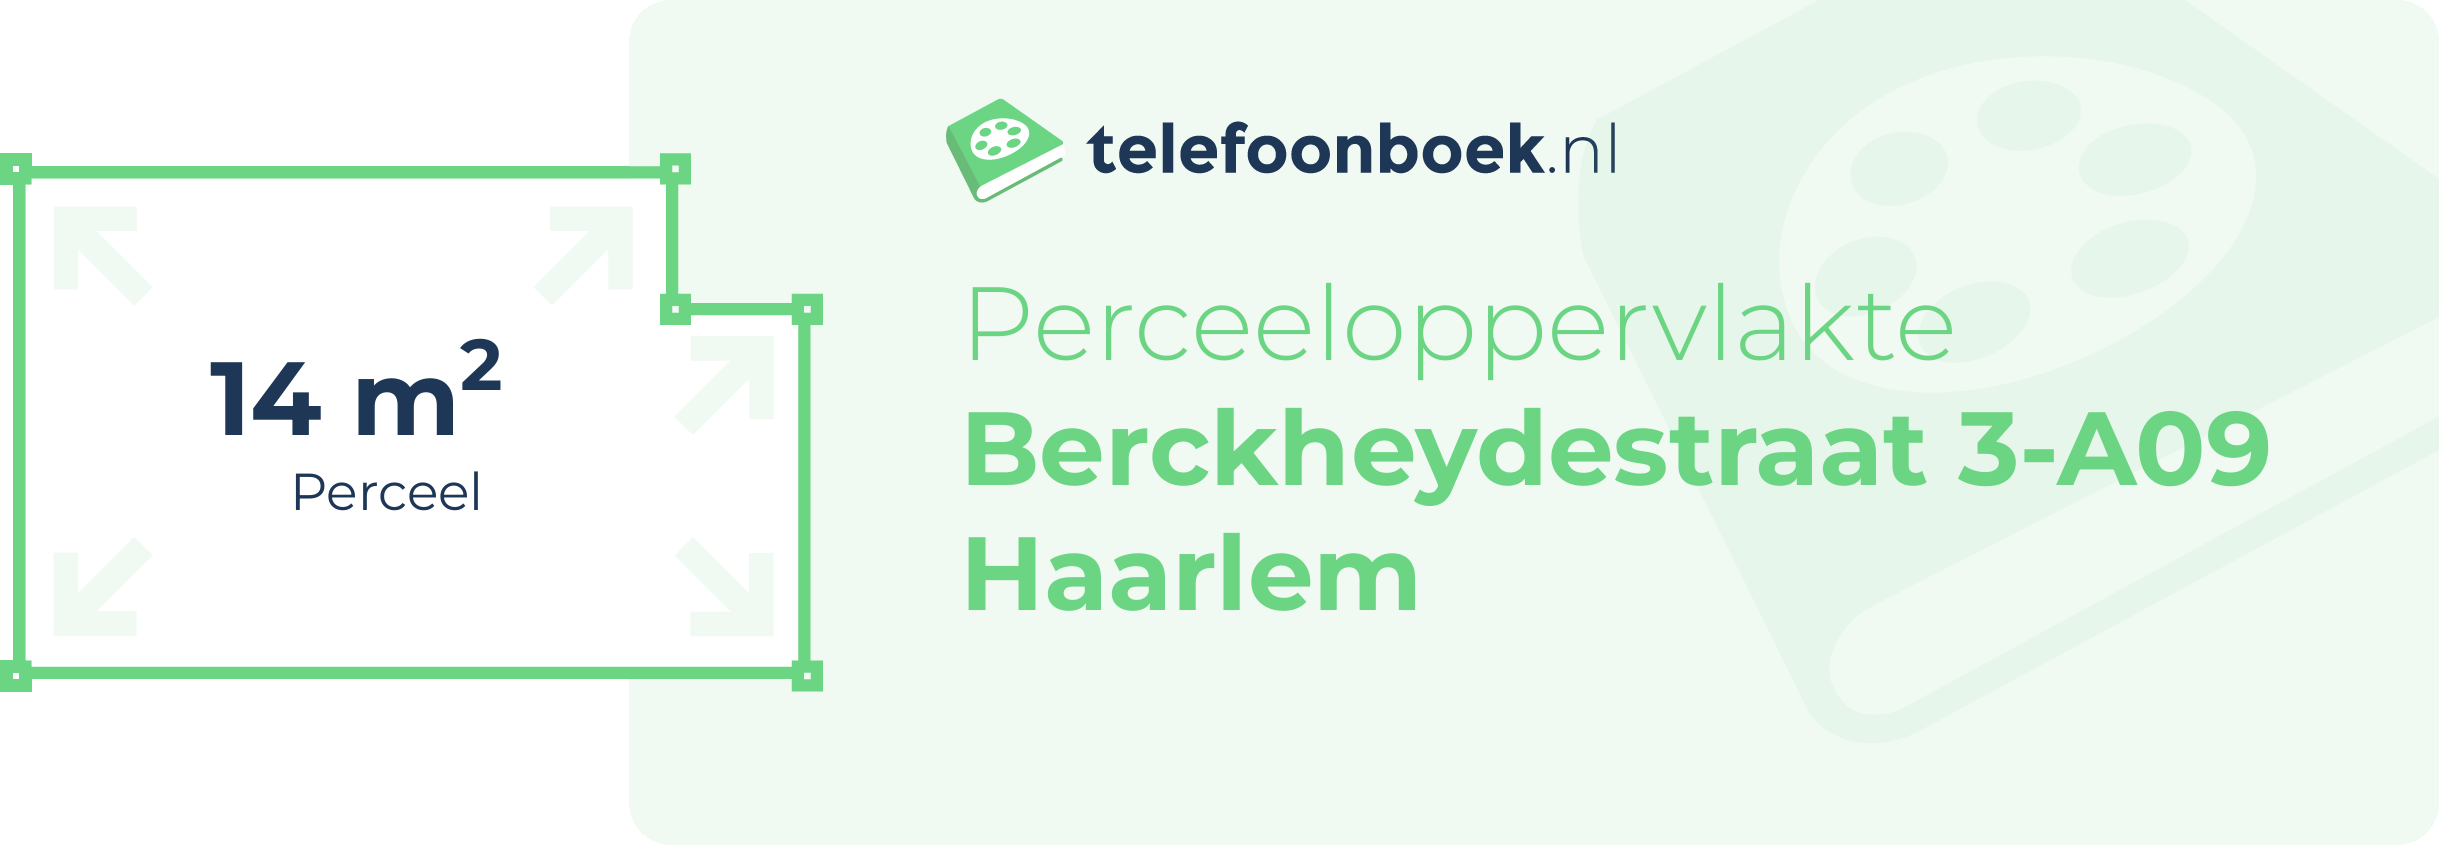 Perceeloppervlakte Berckheydestraat 3-A09 Haarlem